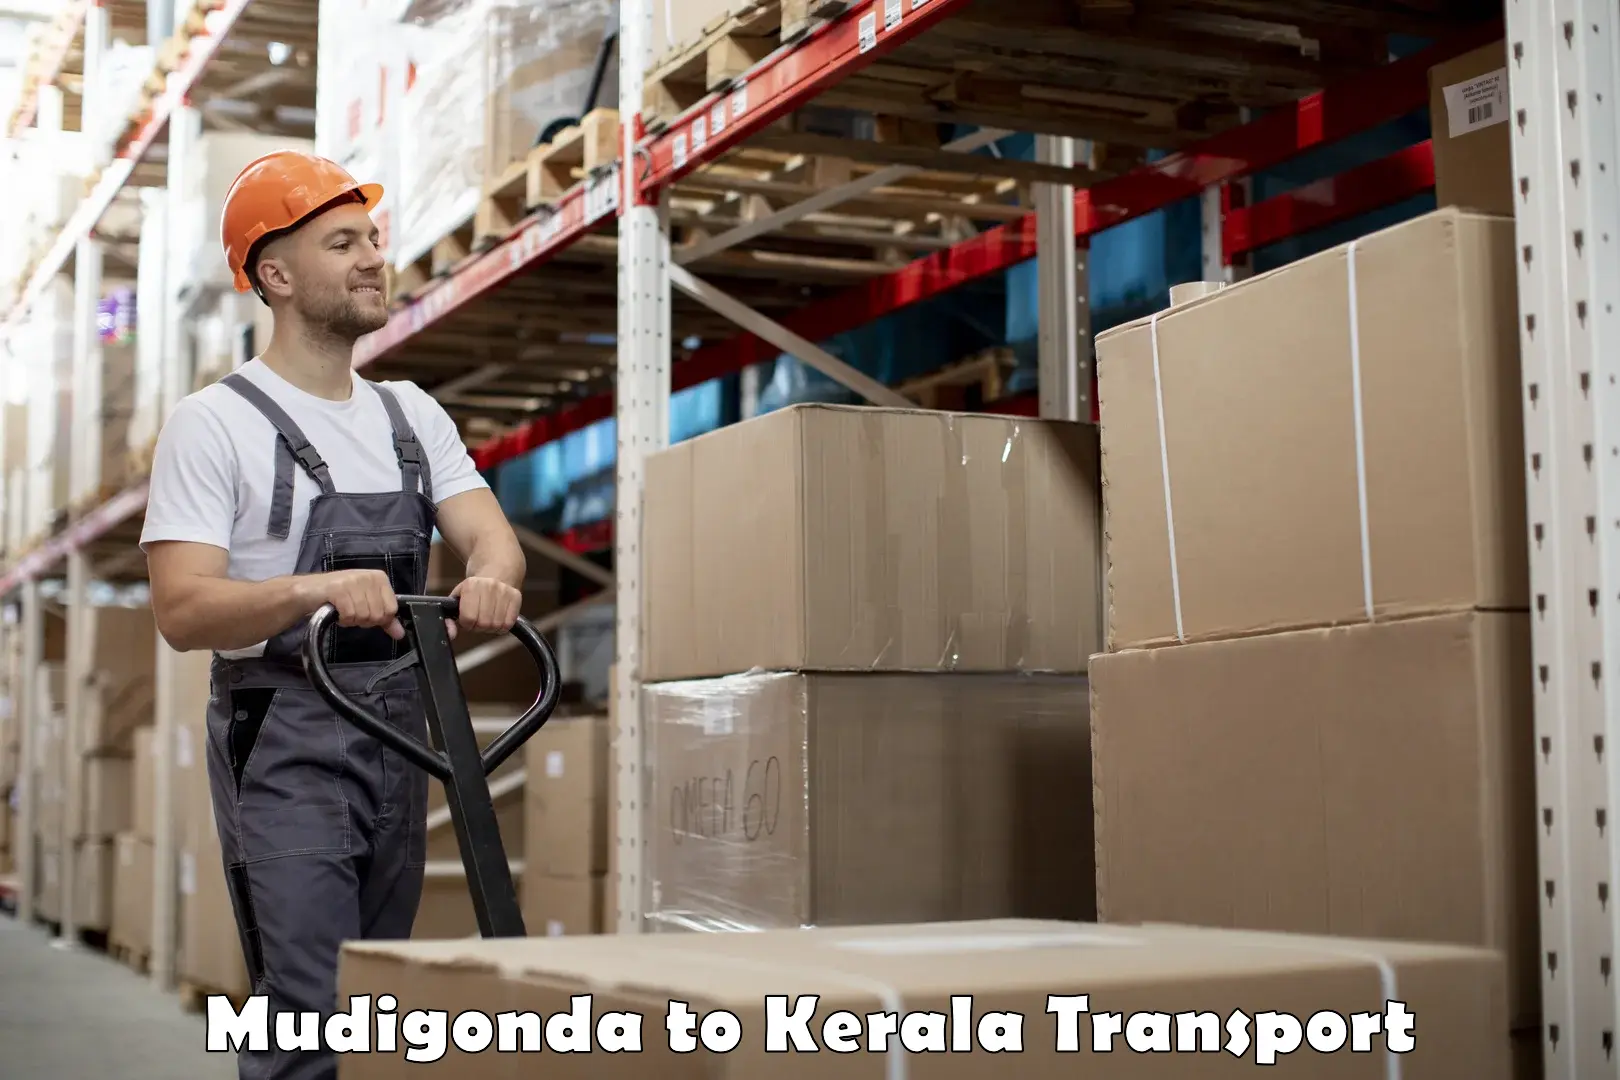 Sending bike to another city Mudigonda to Kerala